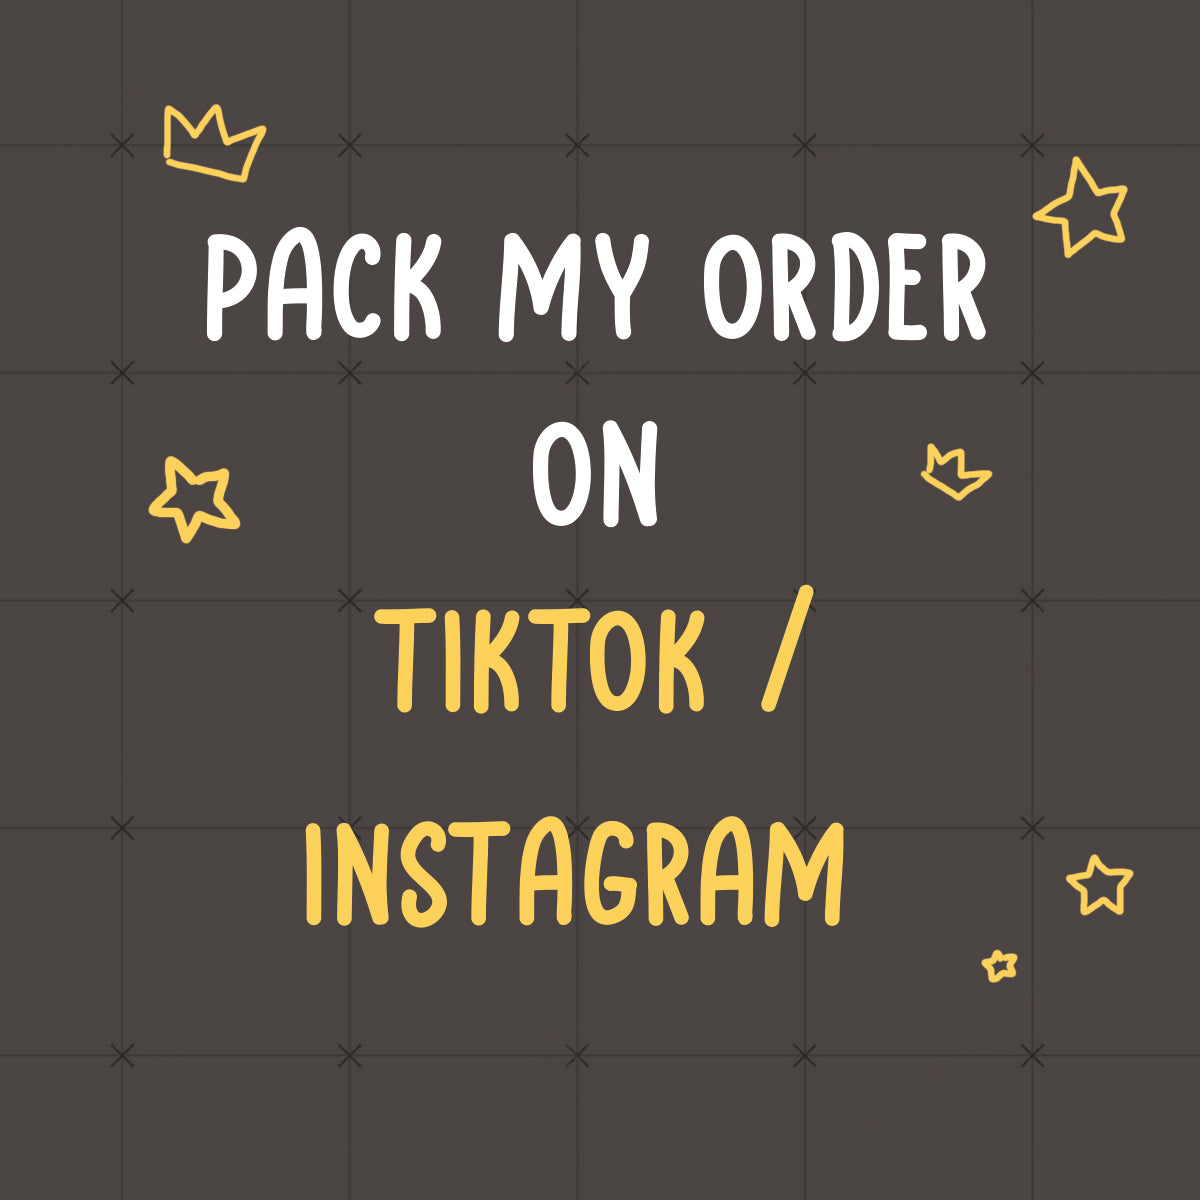 【ADD-ON】tiktok/instagram order packing video